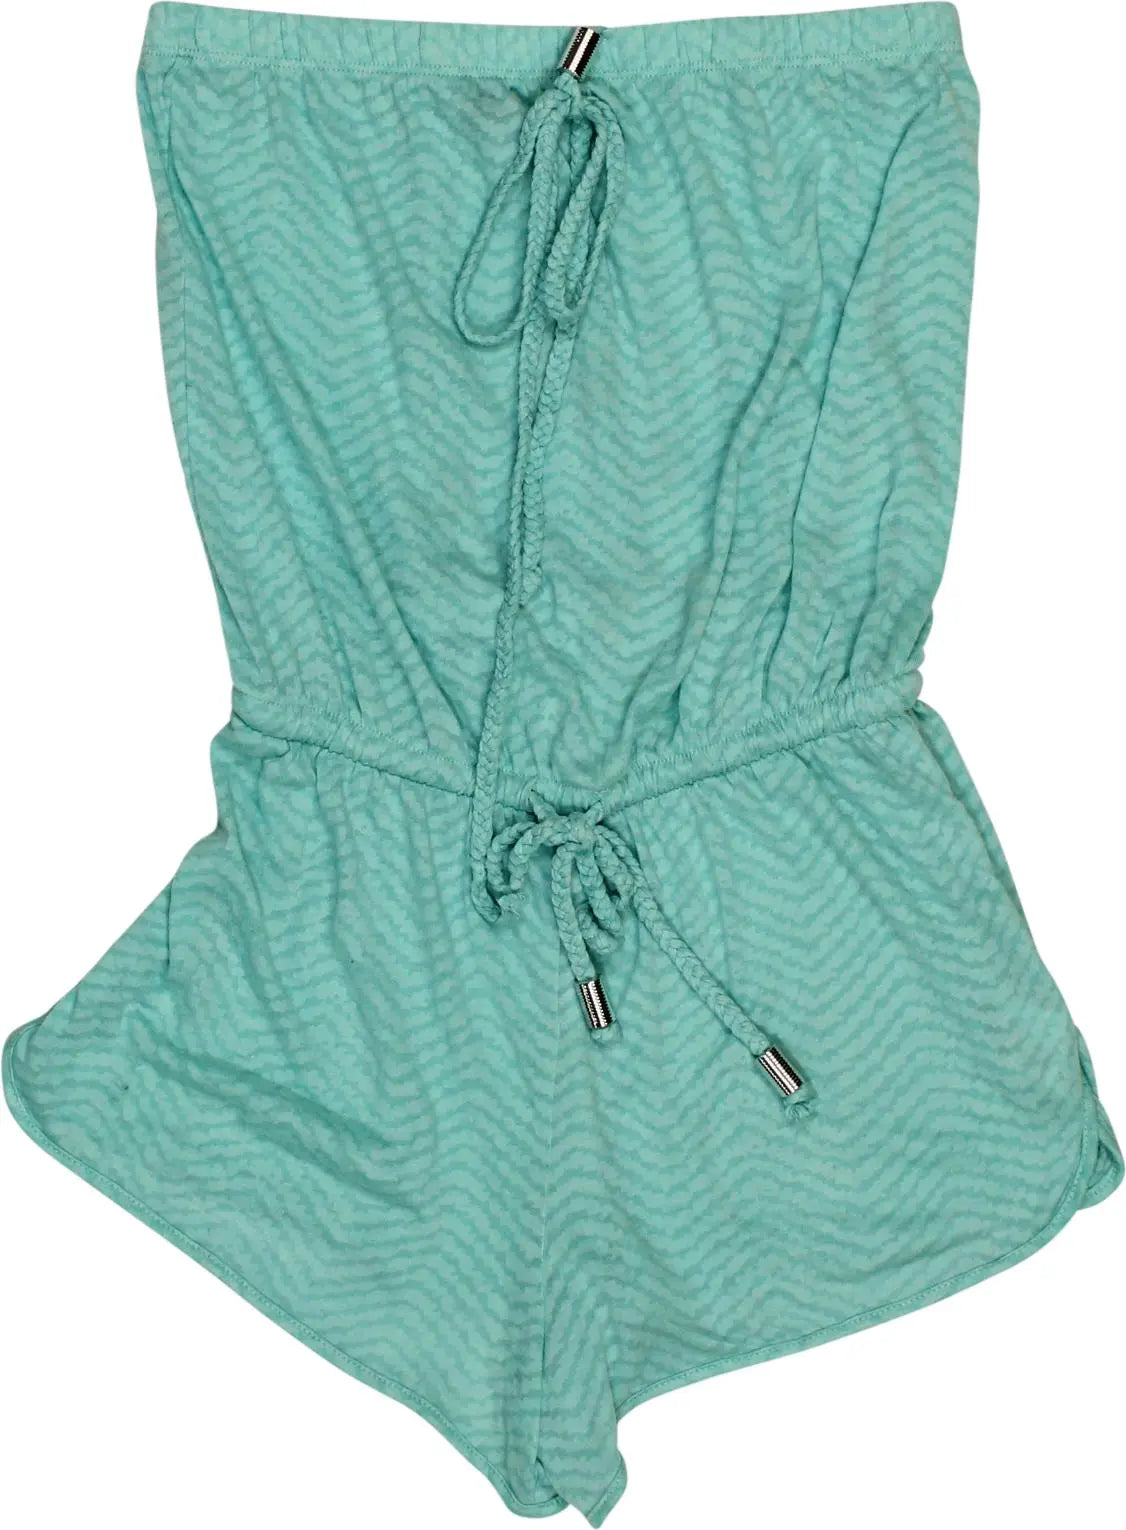 Primark - Blue Strapless Jumpsuit- ThriftTale.com - Vintage and second handclothing